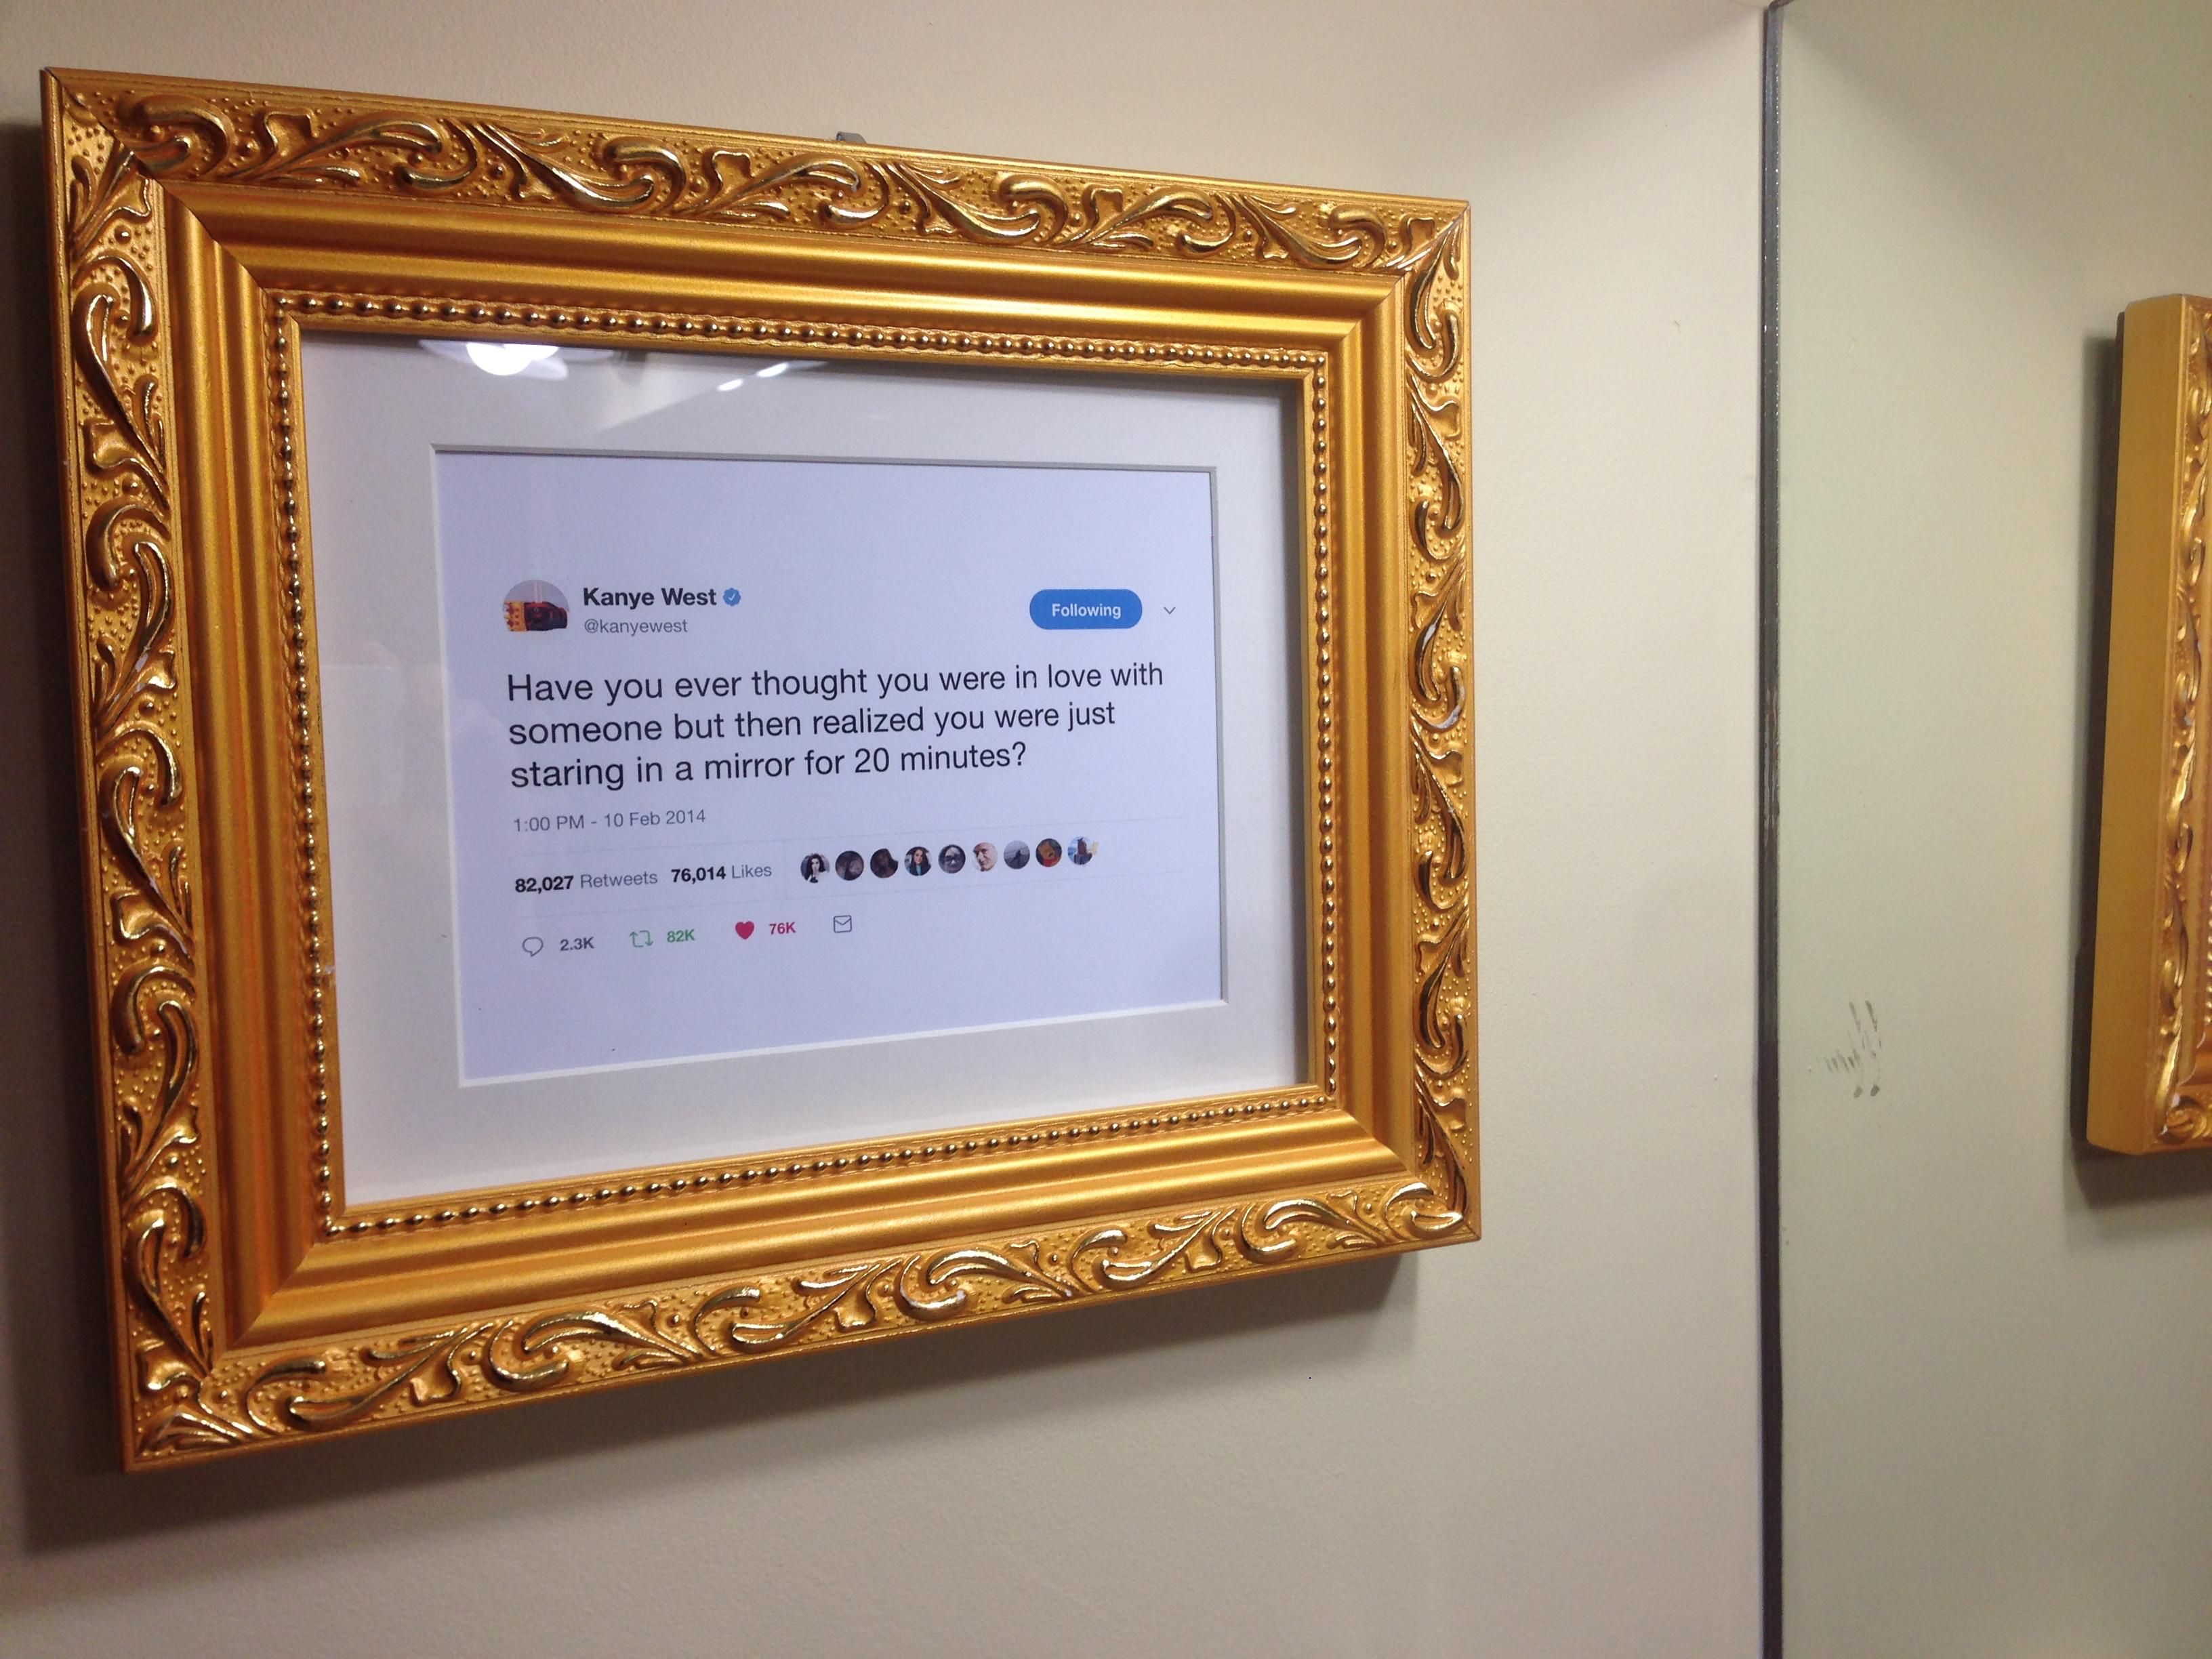 My friend framed a Kanye West tweet in his bathroom